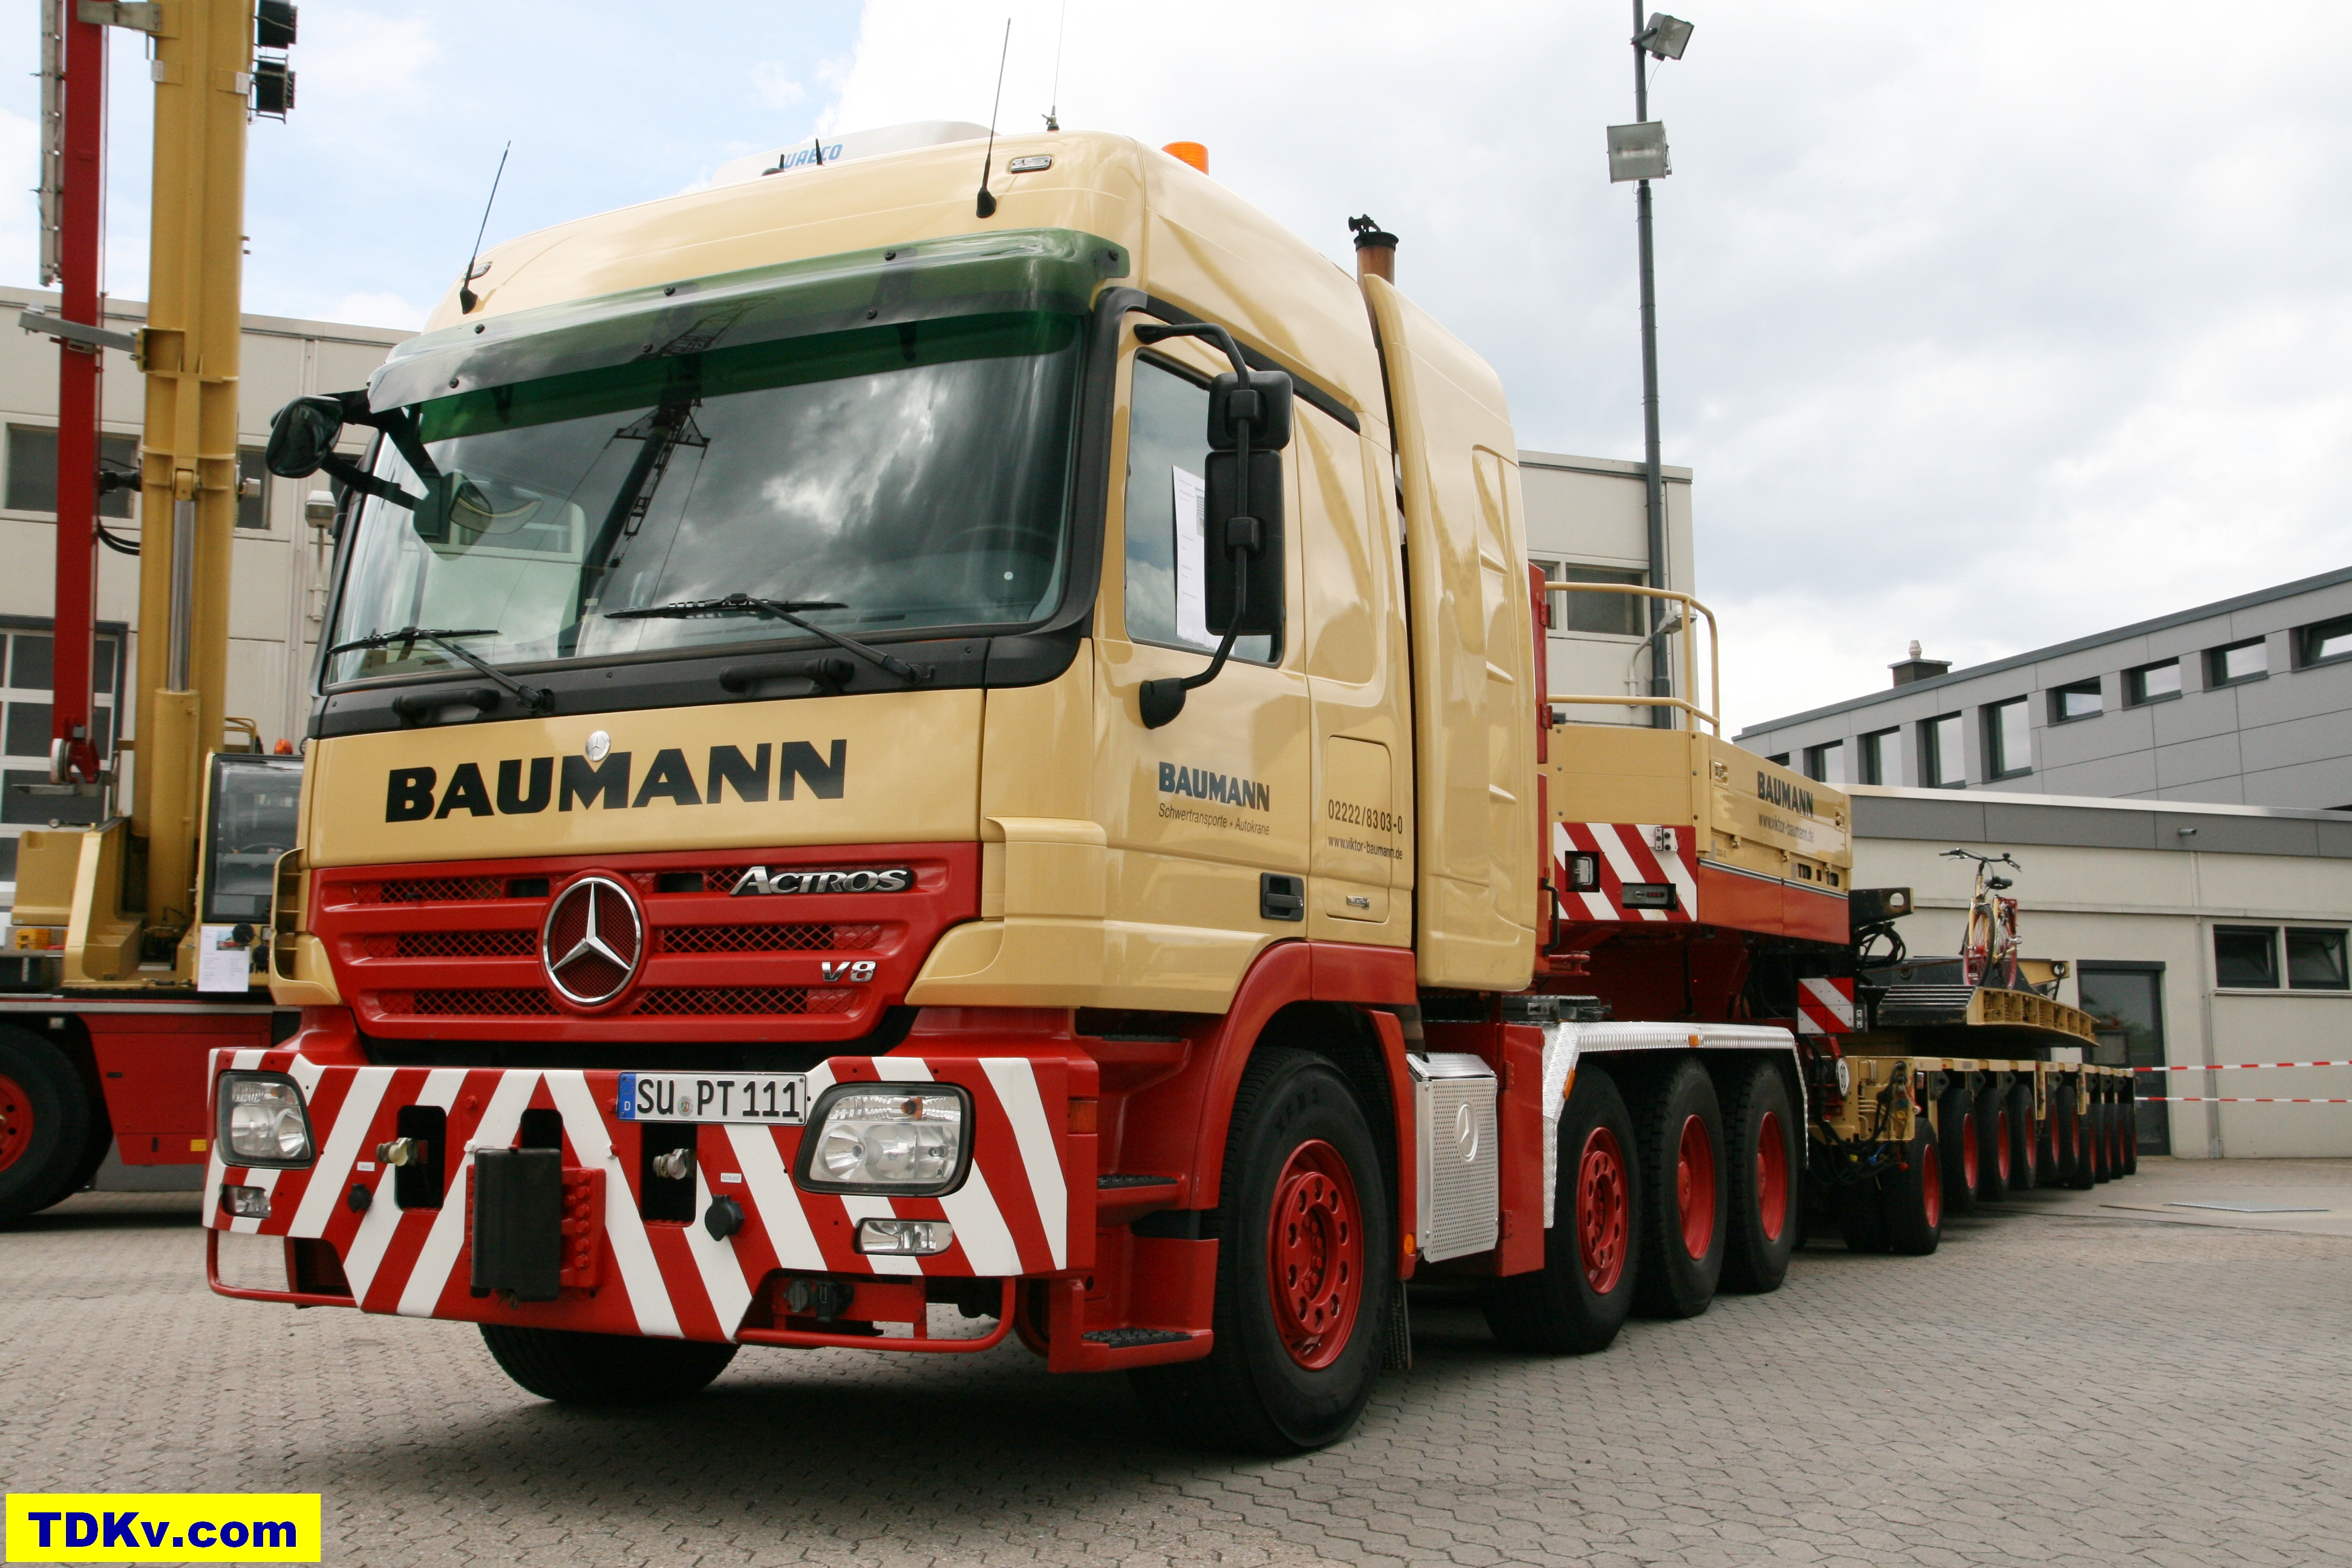 Baumann heavy haulage